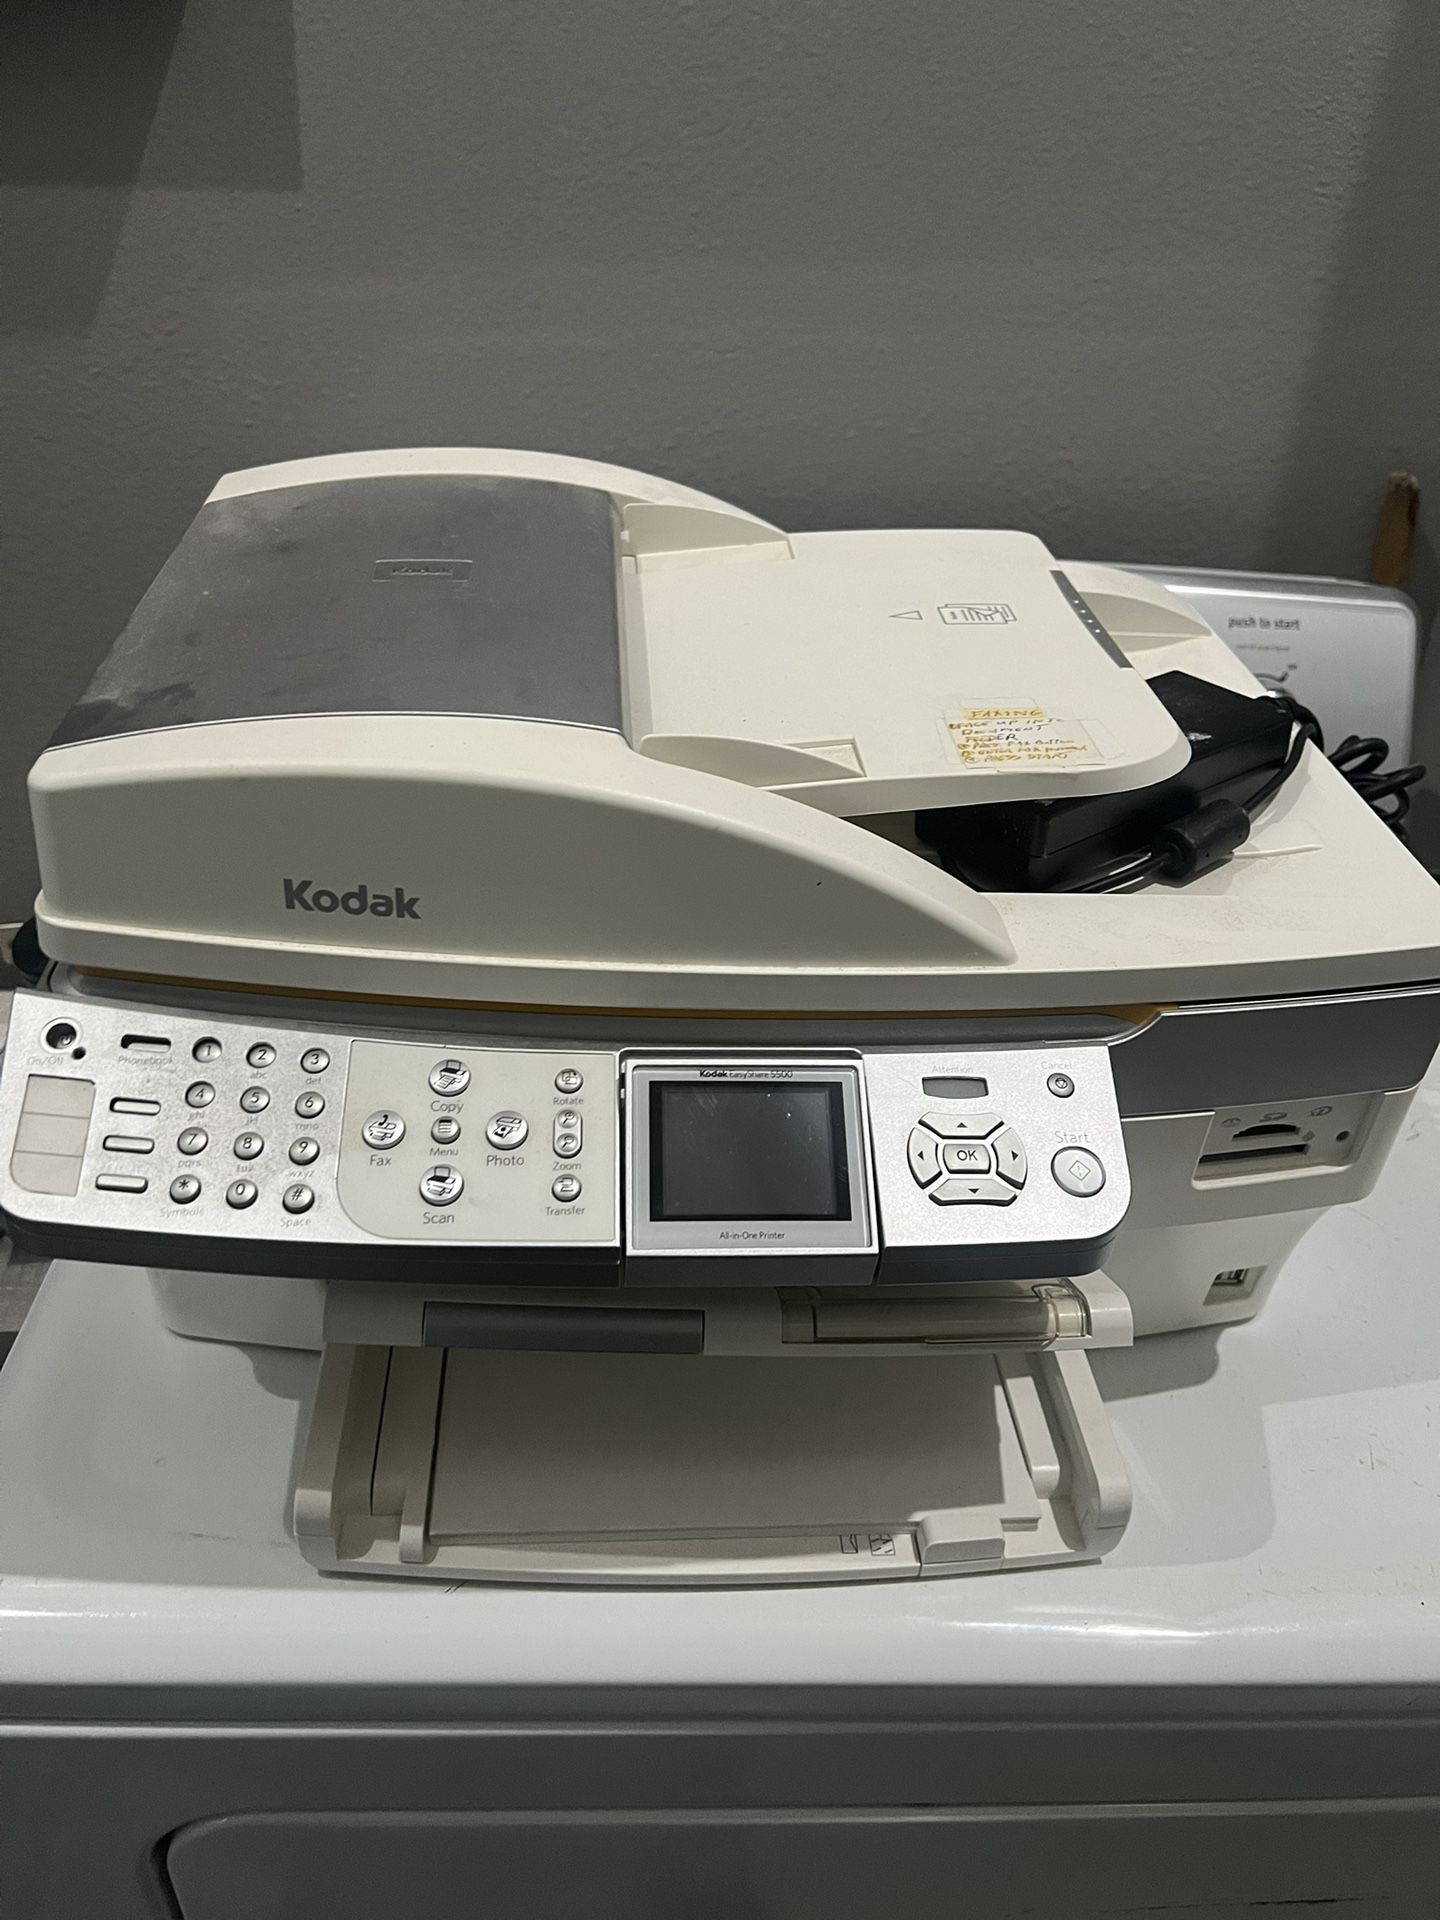 Kodak 5500 Printer Used 